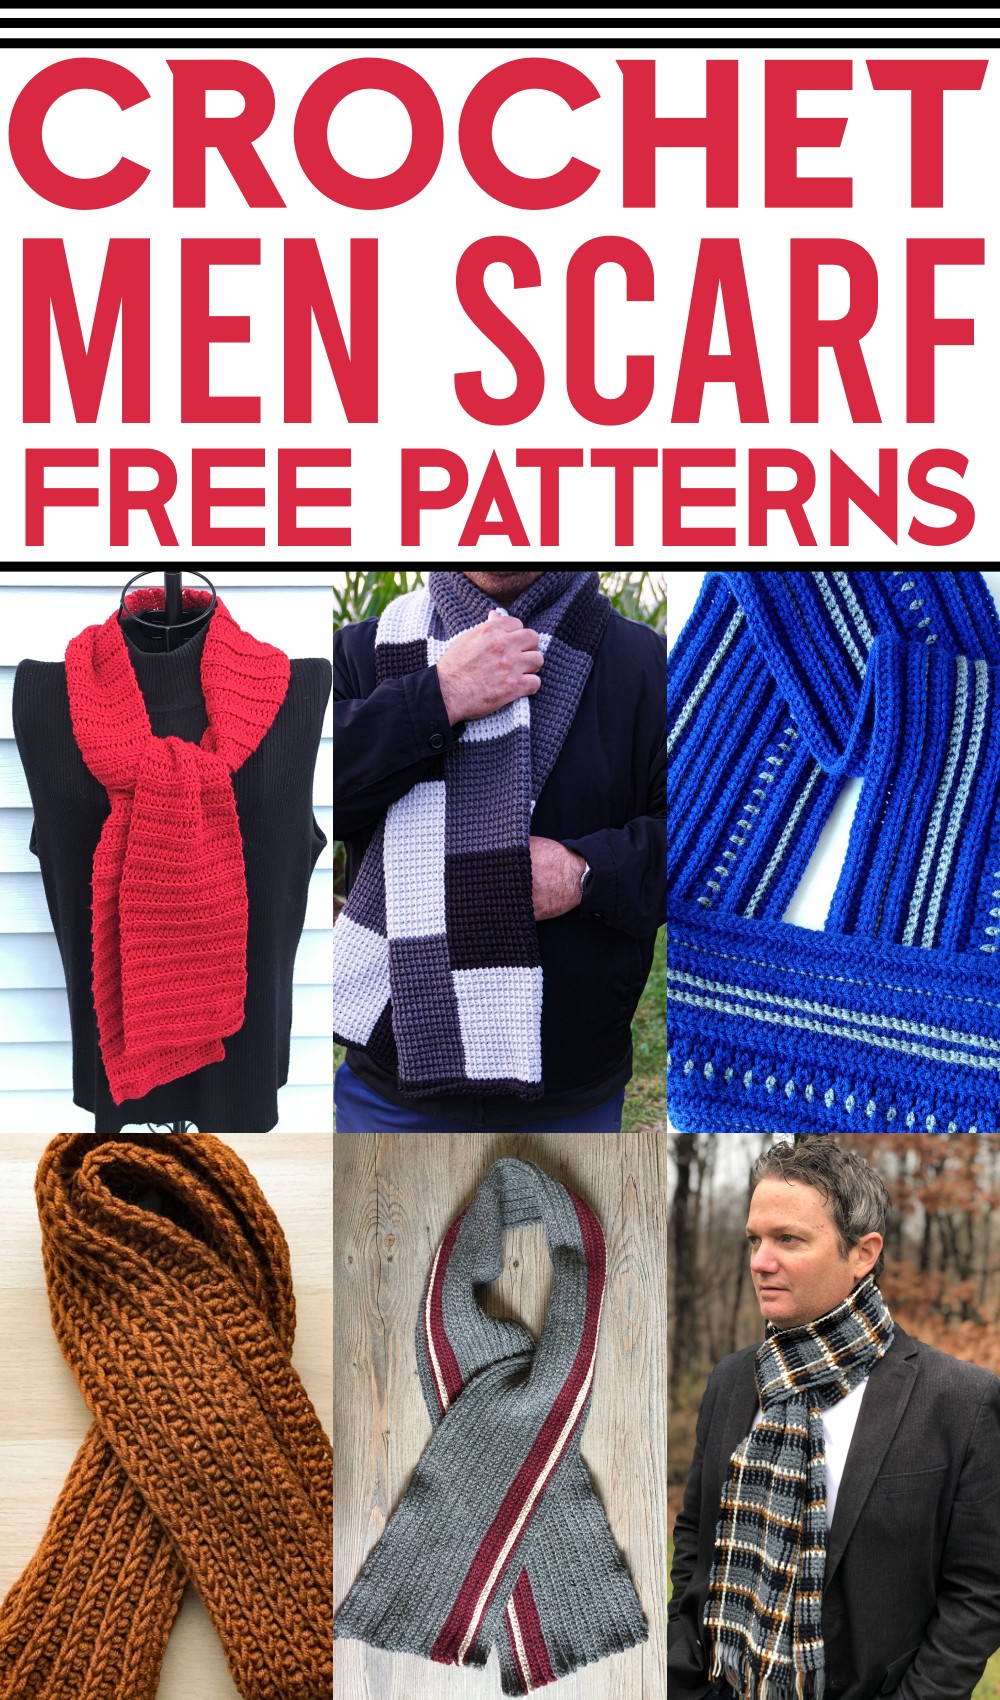 14 Creative Free Crochet Men Scarf Patterns